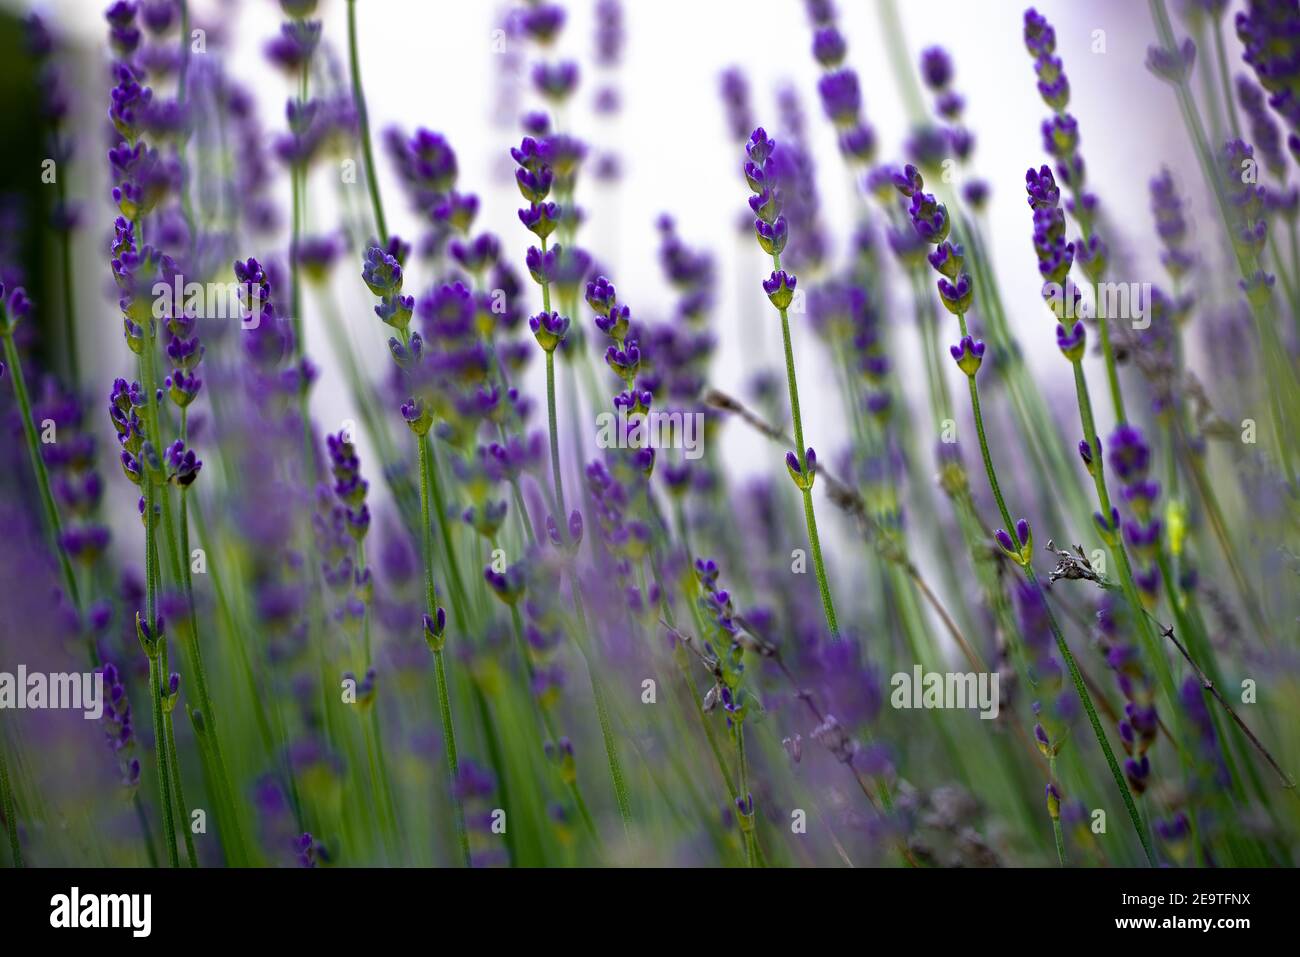 Campo di fiori di lavanda, Lavandula angustifolia, Lavandula officinalis (Macro shot / close up) - colore viola scuro (Wallpaper) Foto Stock